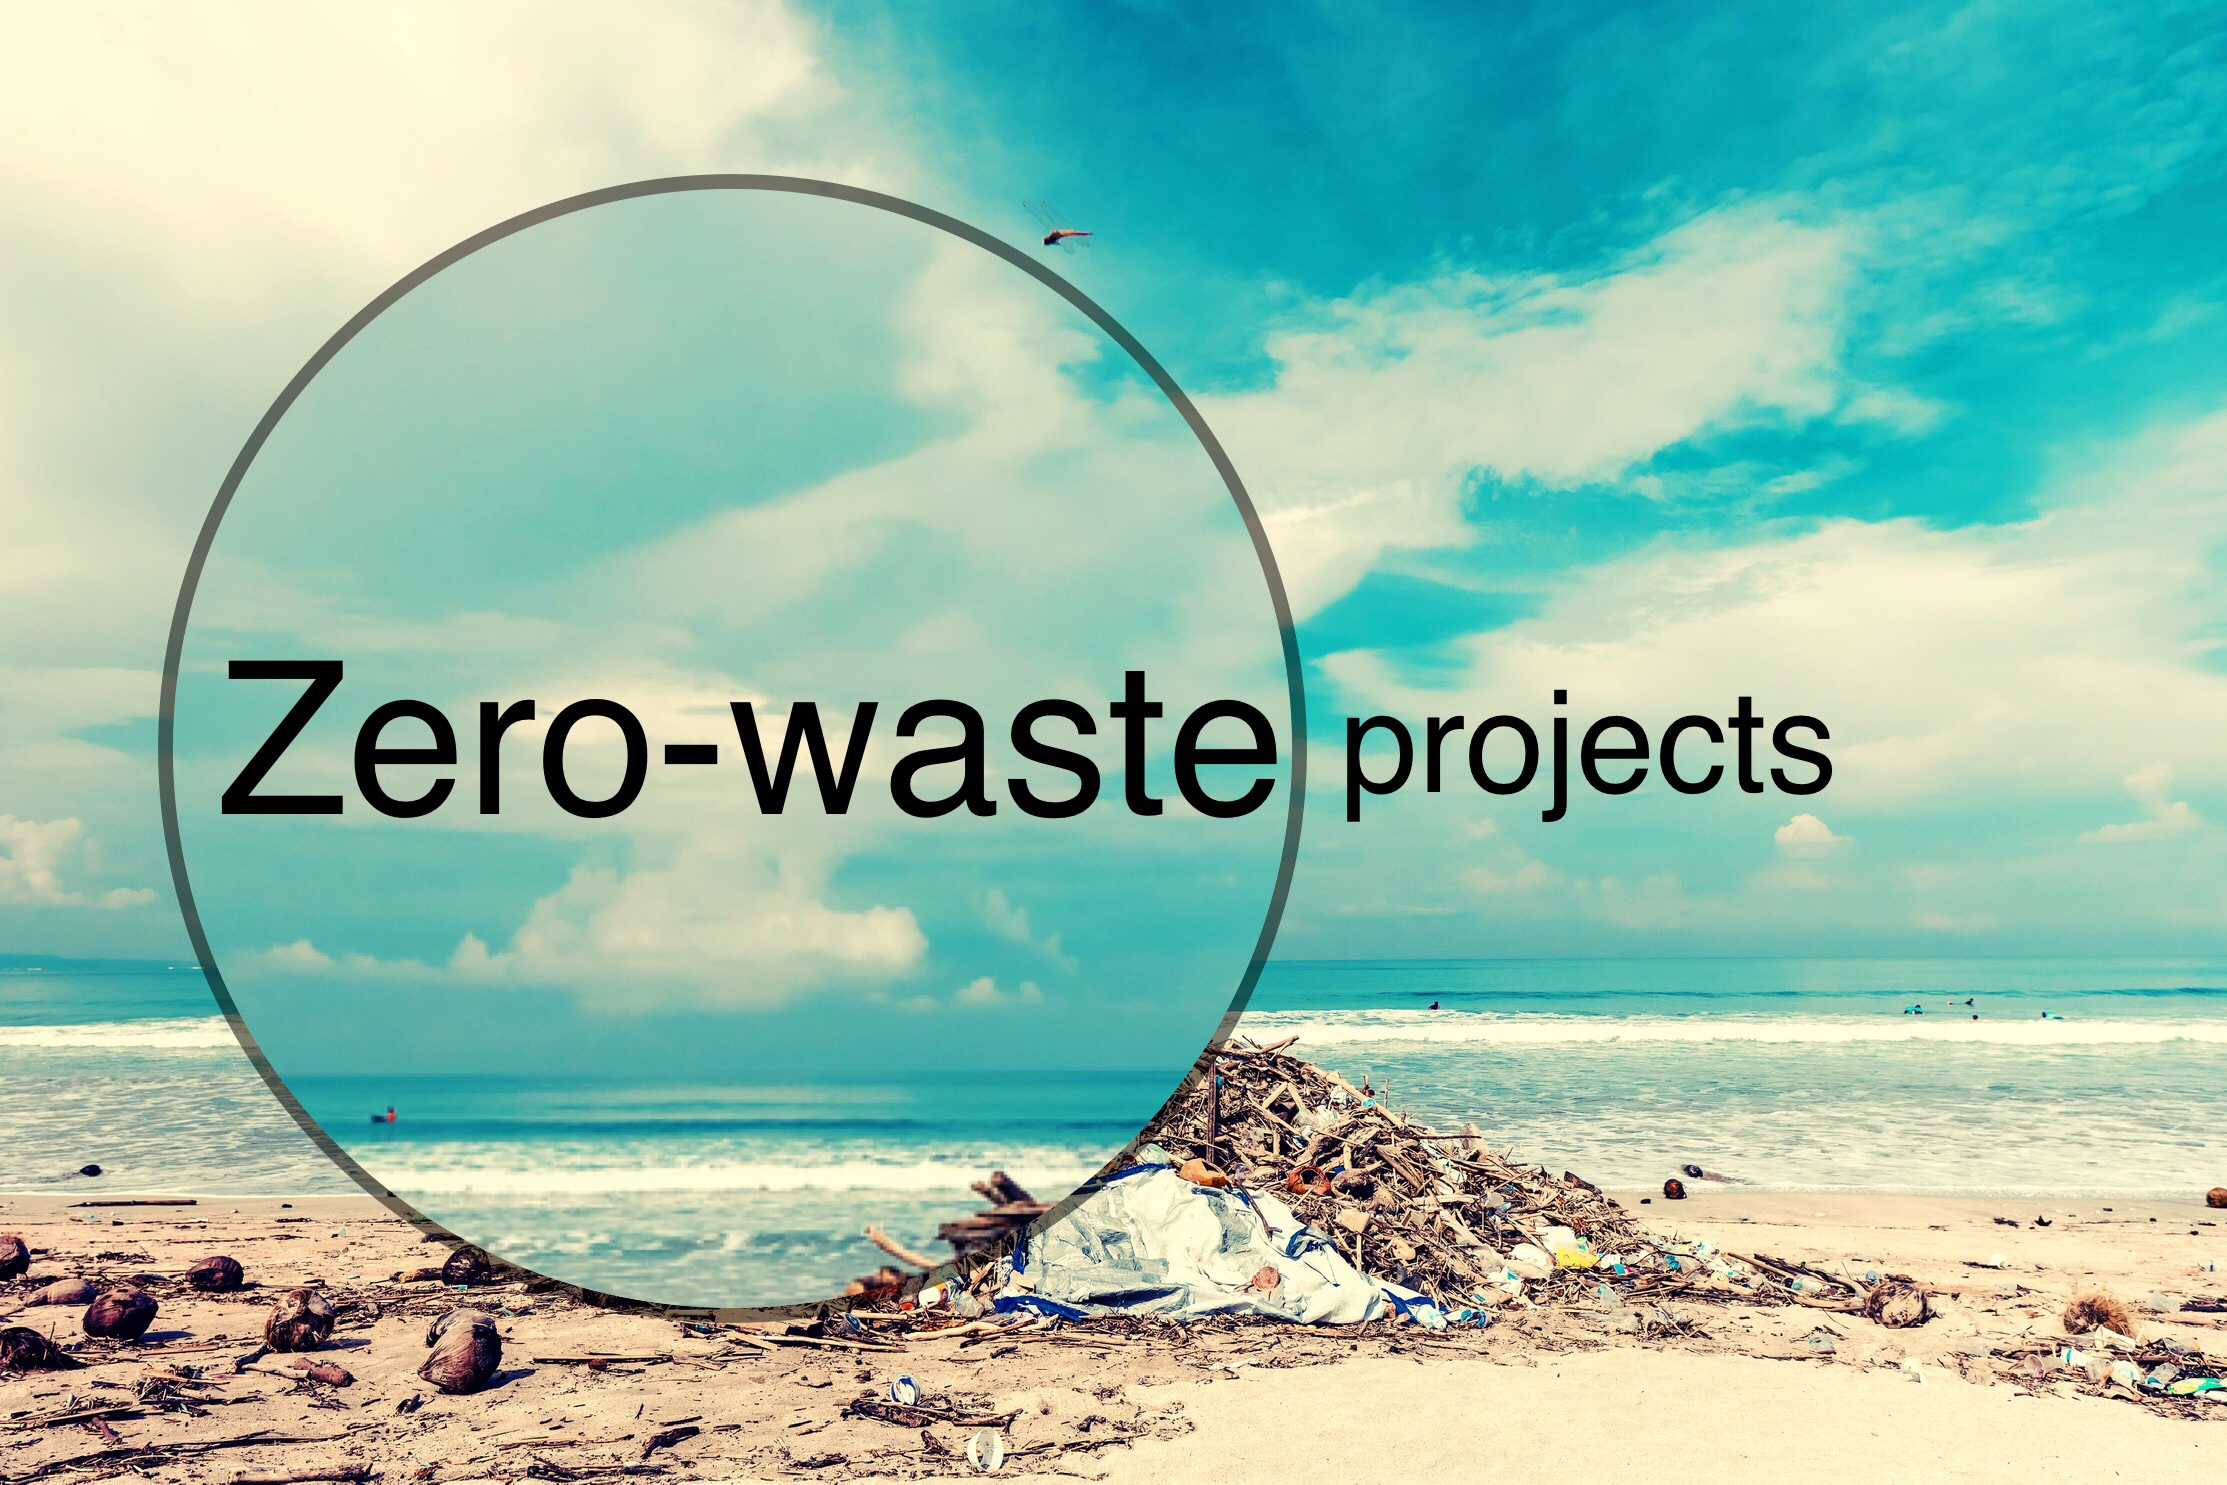 Zero-waste projects